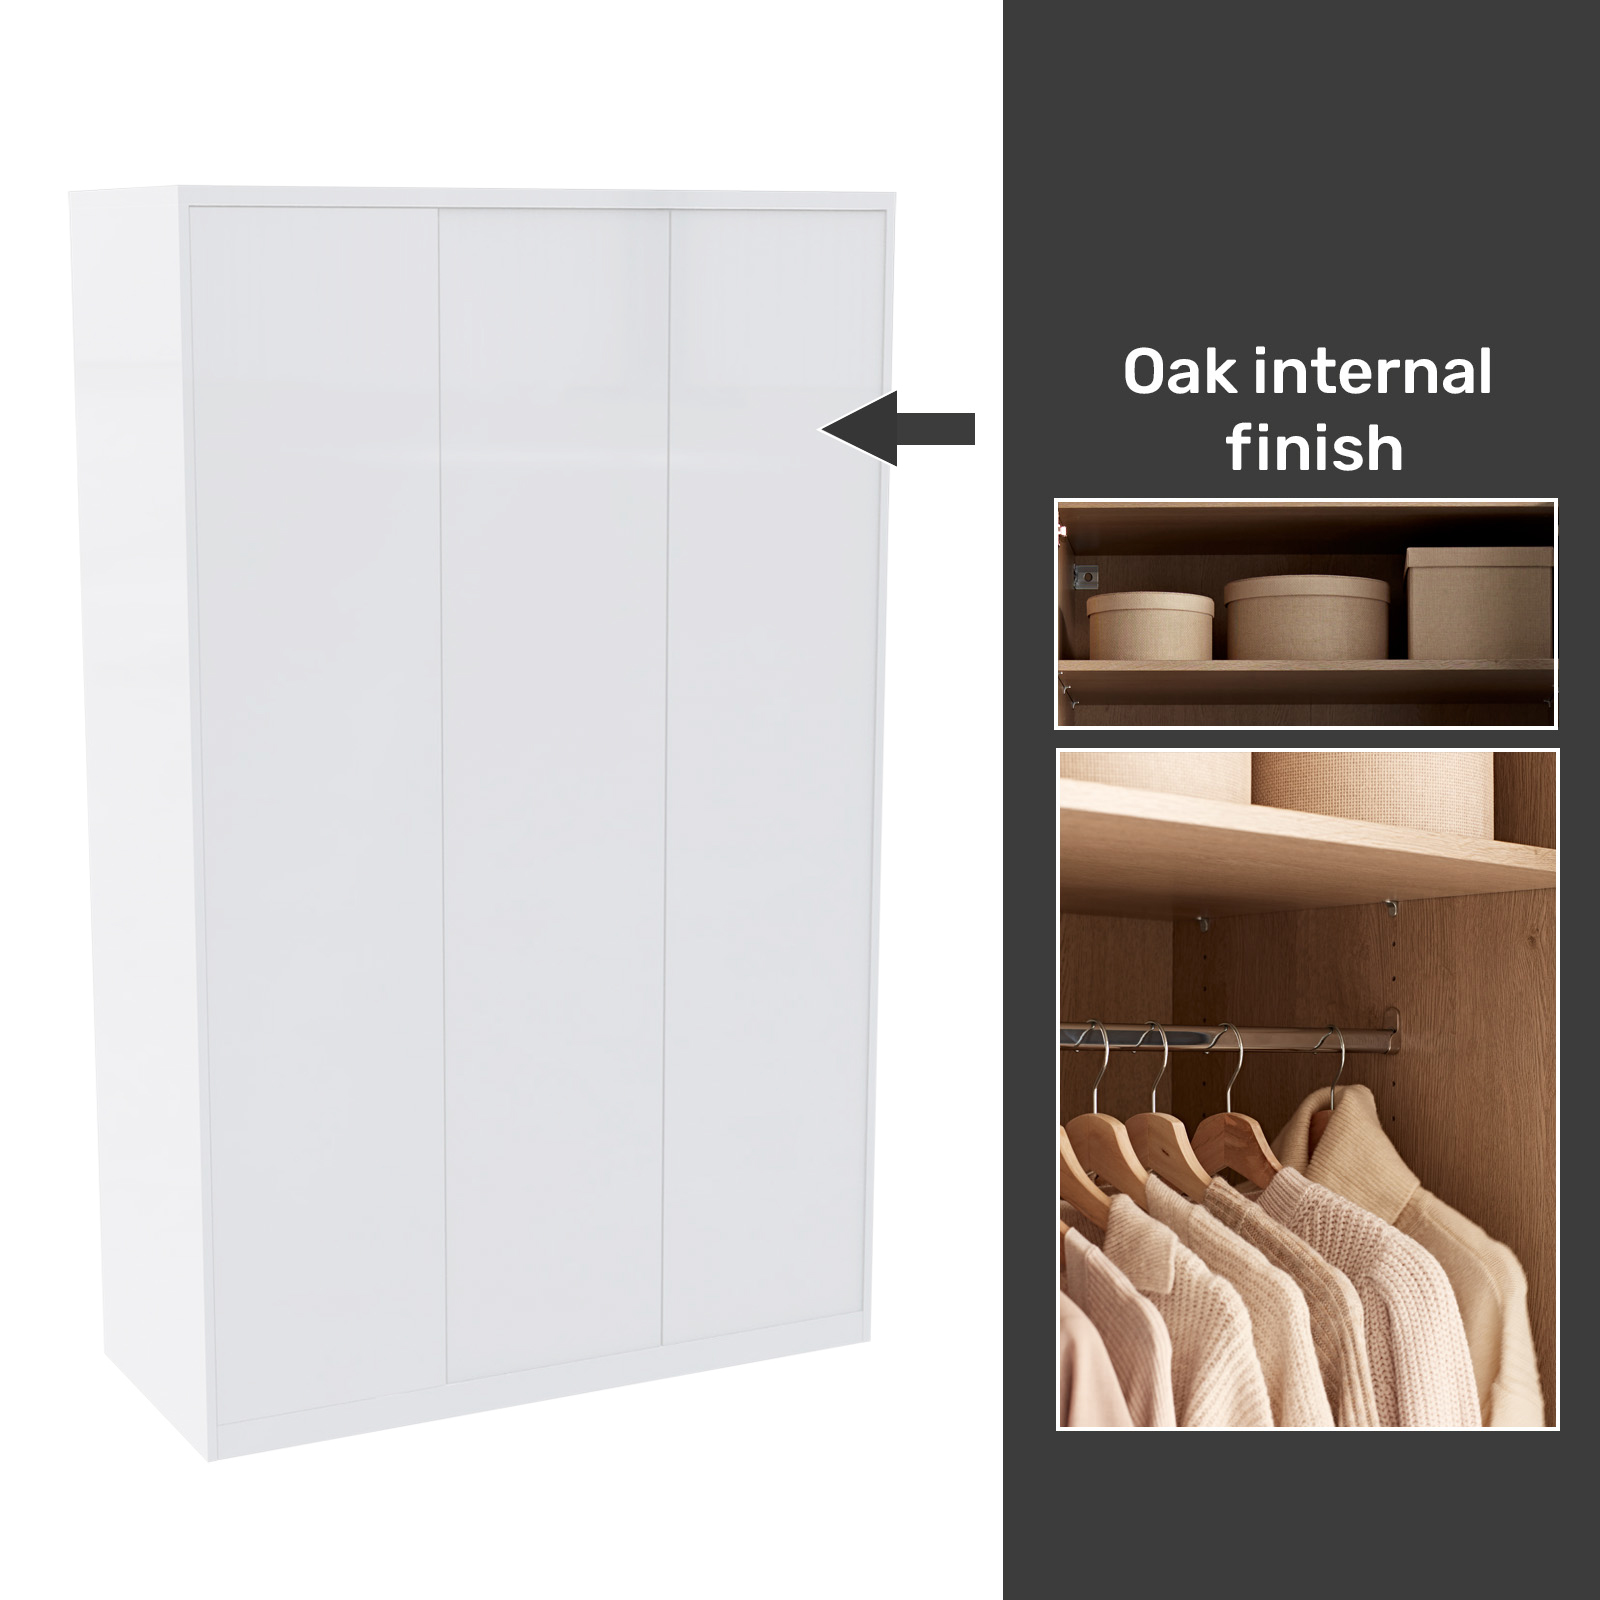 House Beautiful Honest Fitted Look Triple Wardrobe, Oak Effect Carcass - Gloss White Slab Doors (W) 1390mm x (H) 2226mm